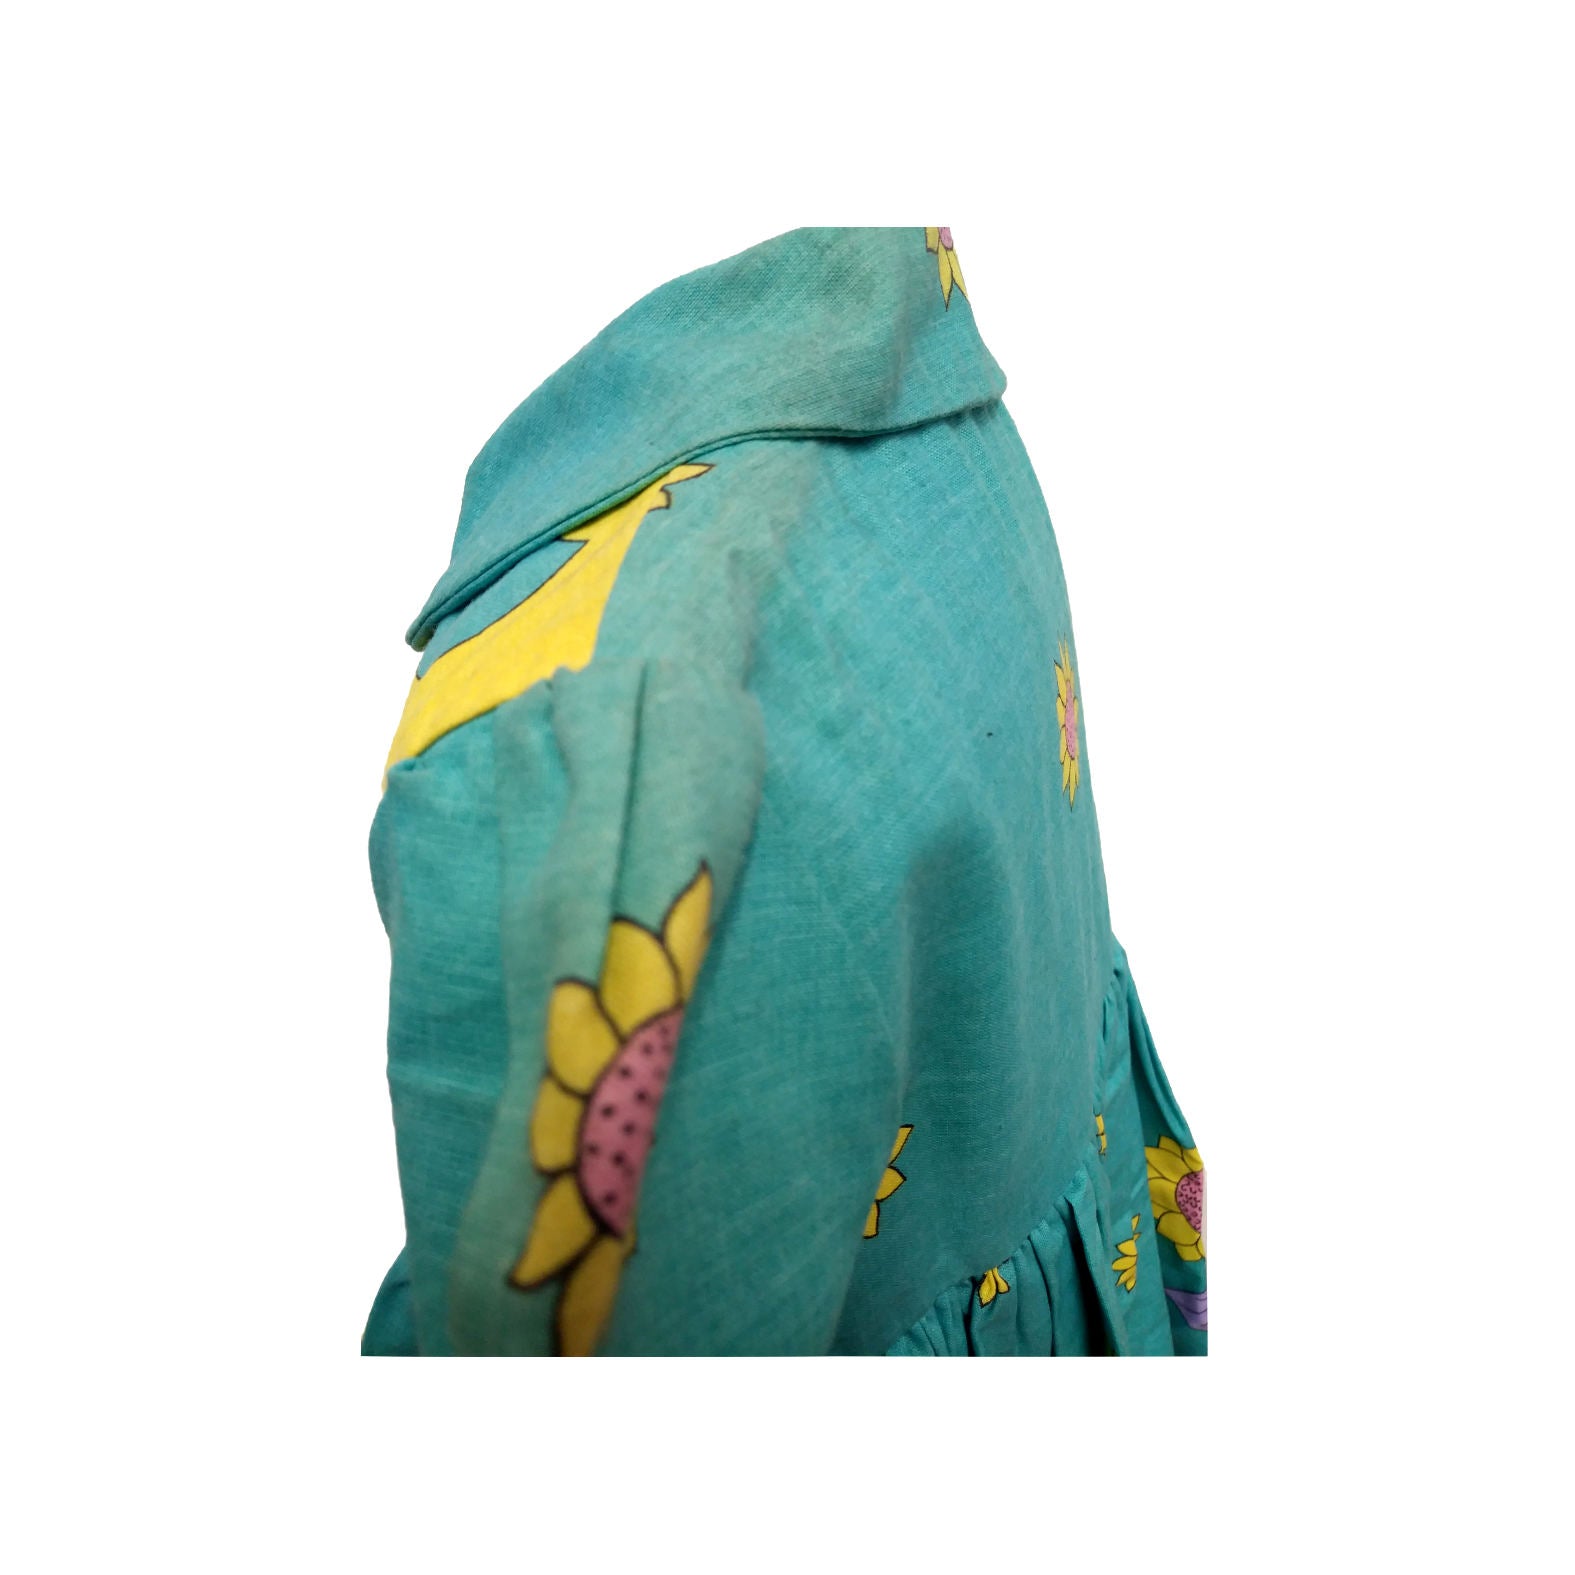 Archive Poppy - Waistcoat Dress - Turquoise Sunflowers